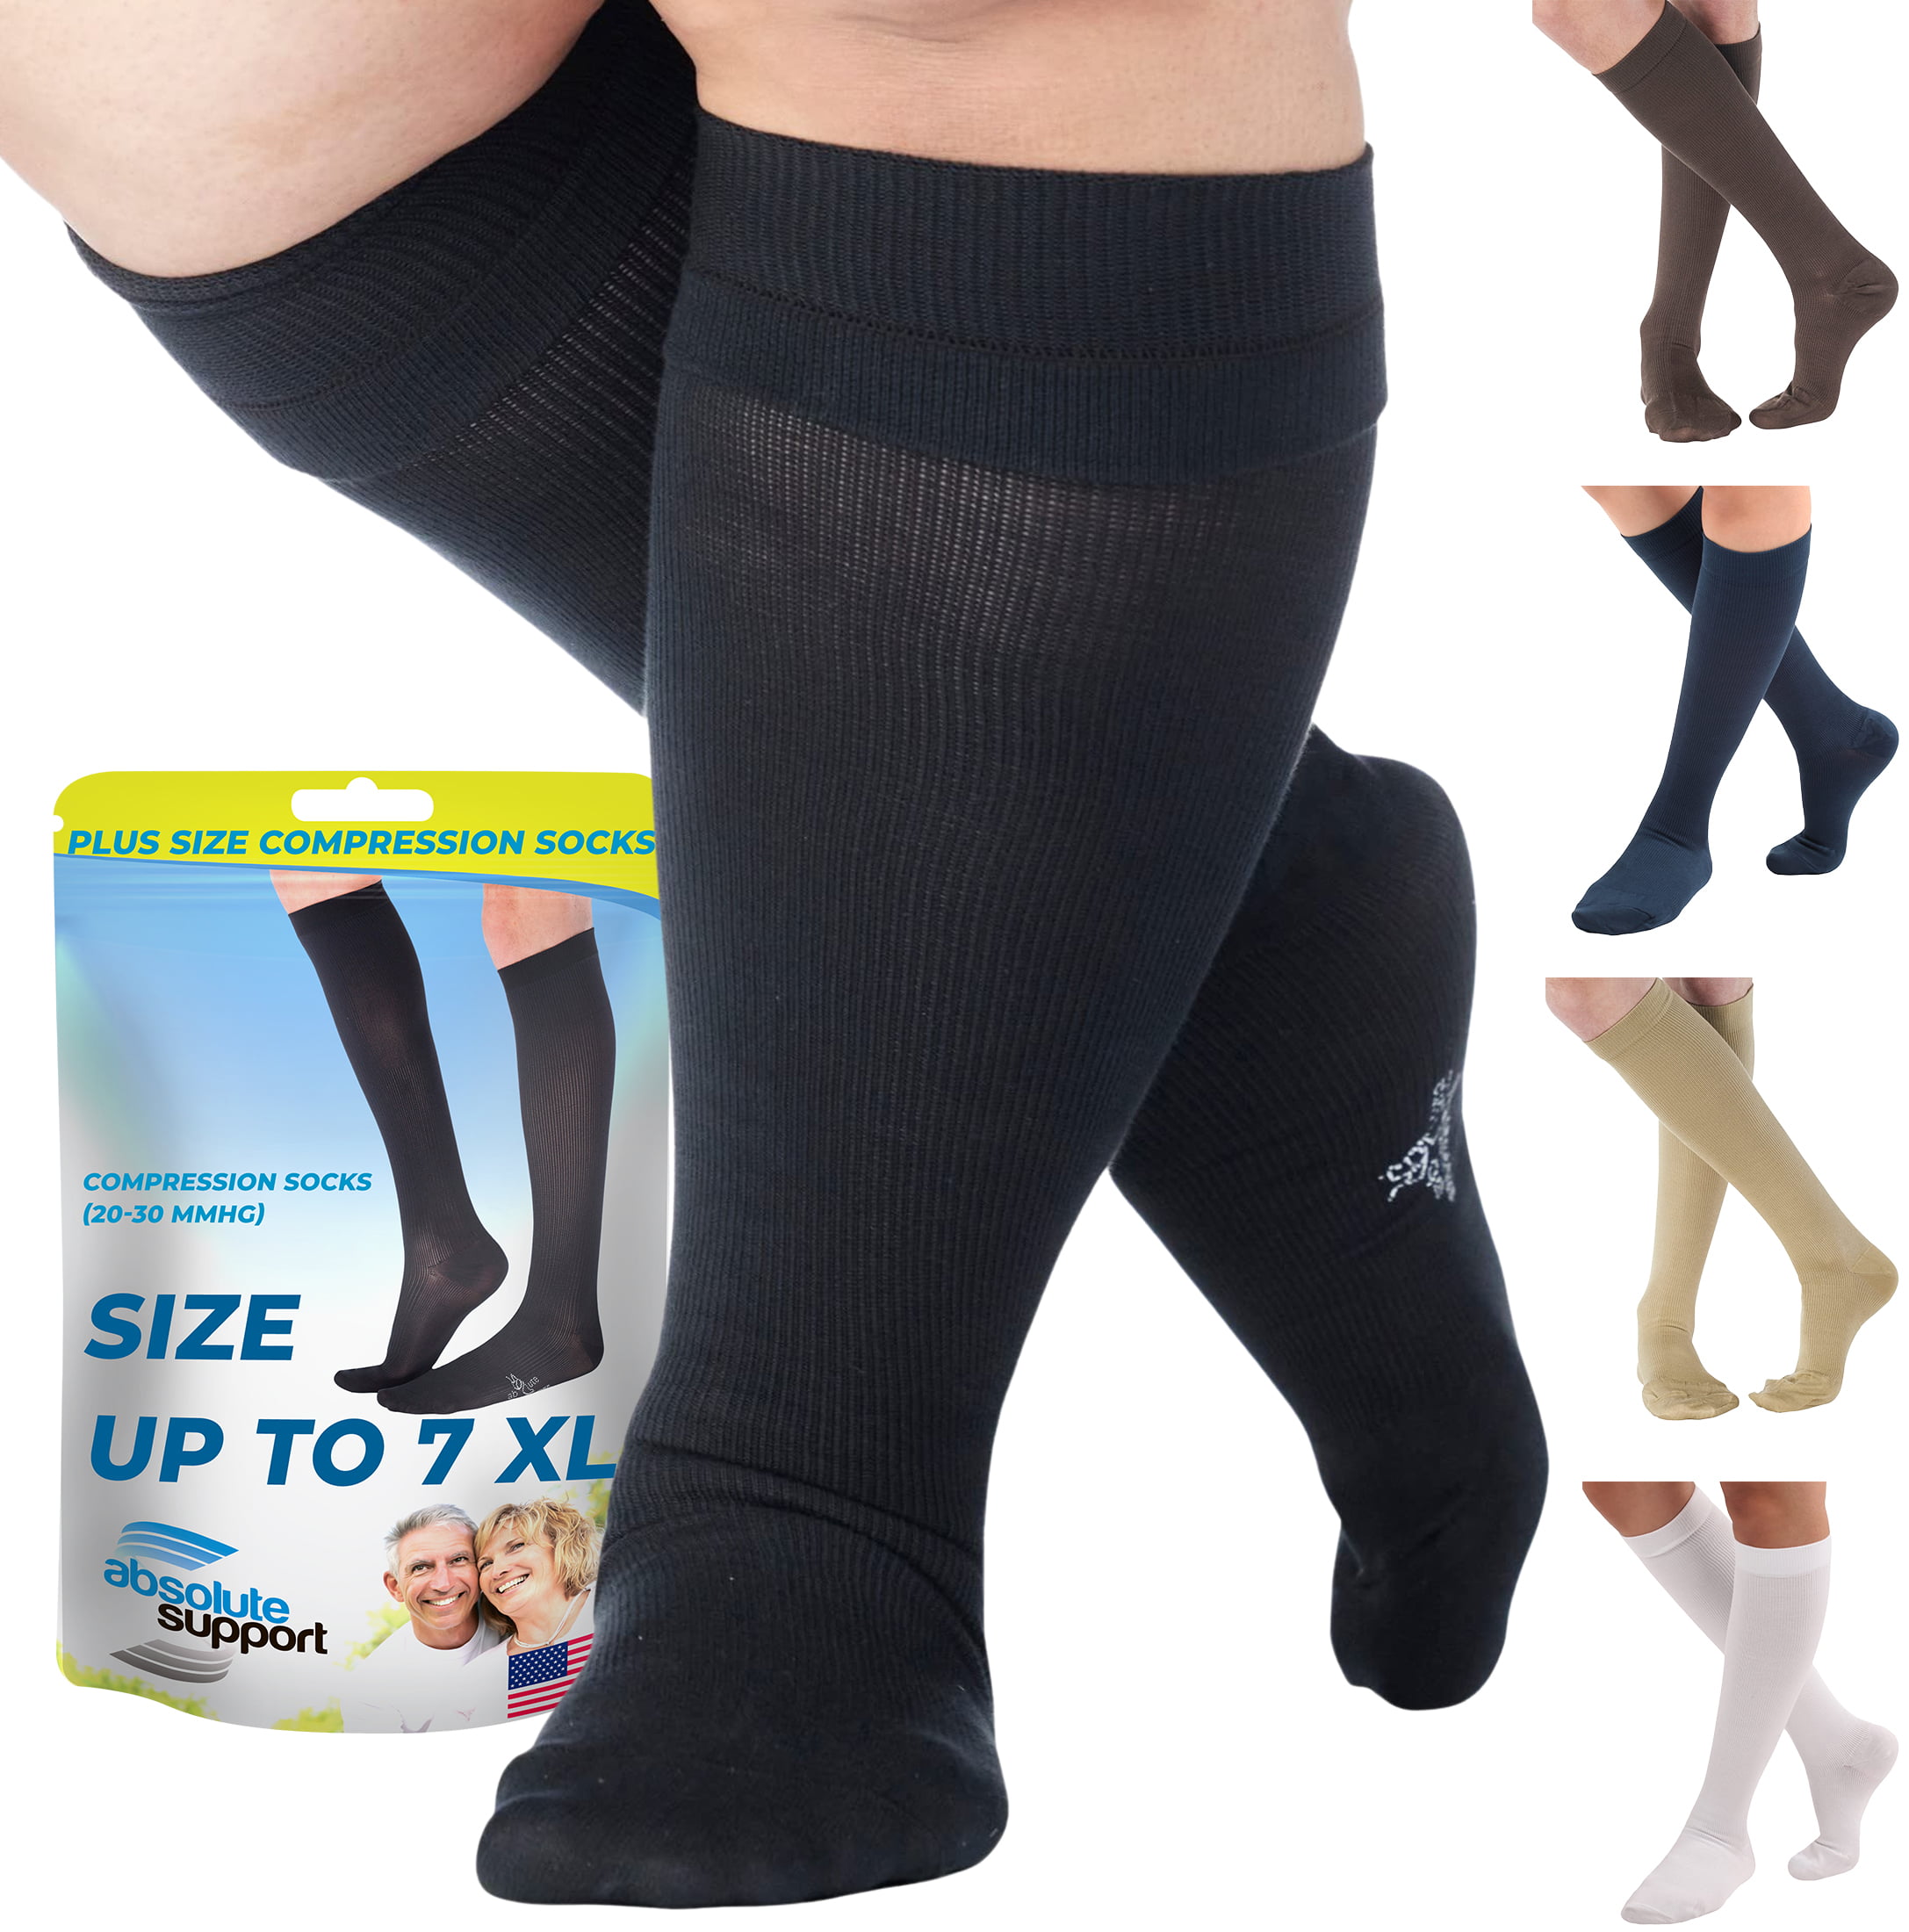 Open Toe Graduated Compressione Knee High Socks Made in Italy Black,Skin S/XL 18-22 mmHg Medical Socks 140 DEN 